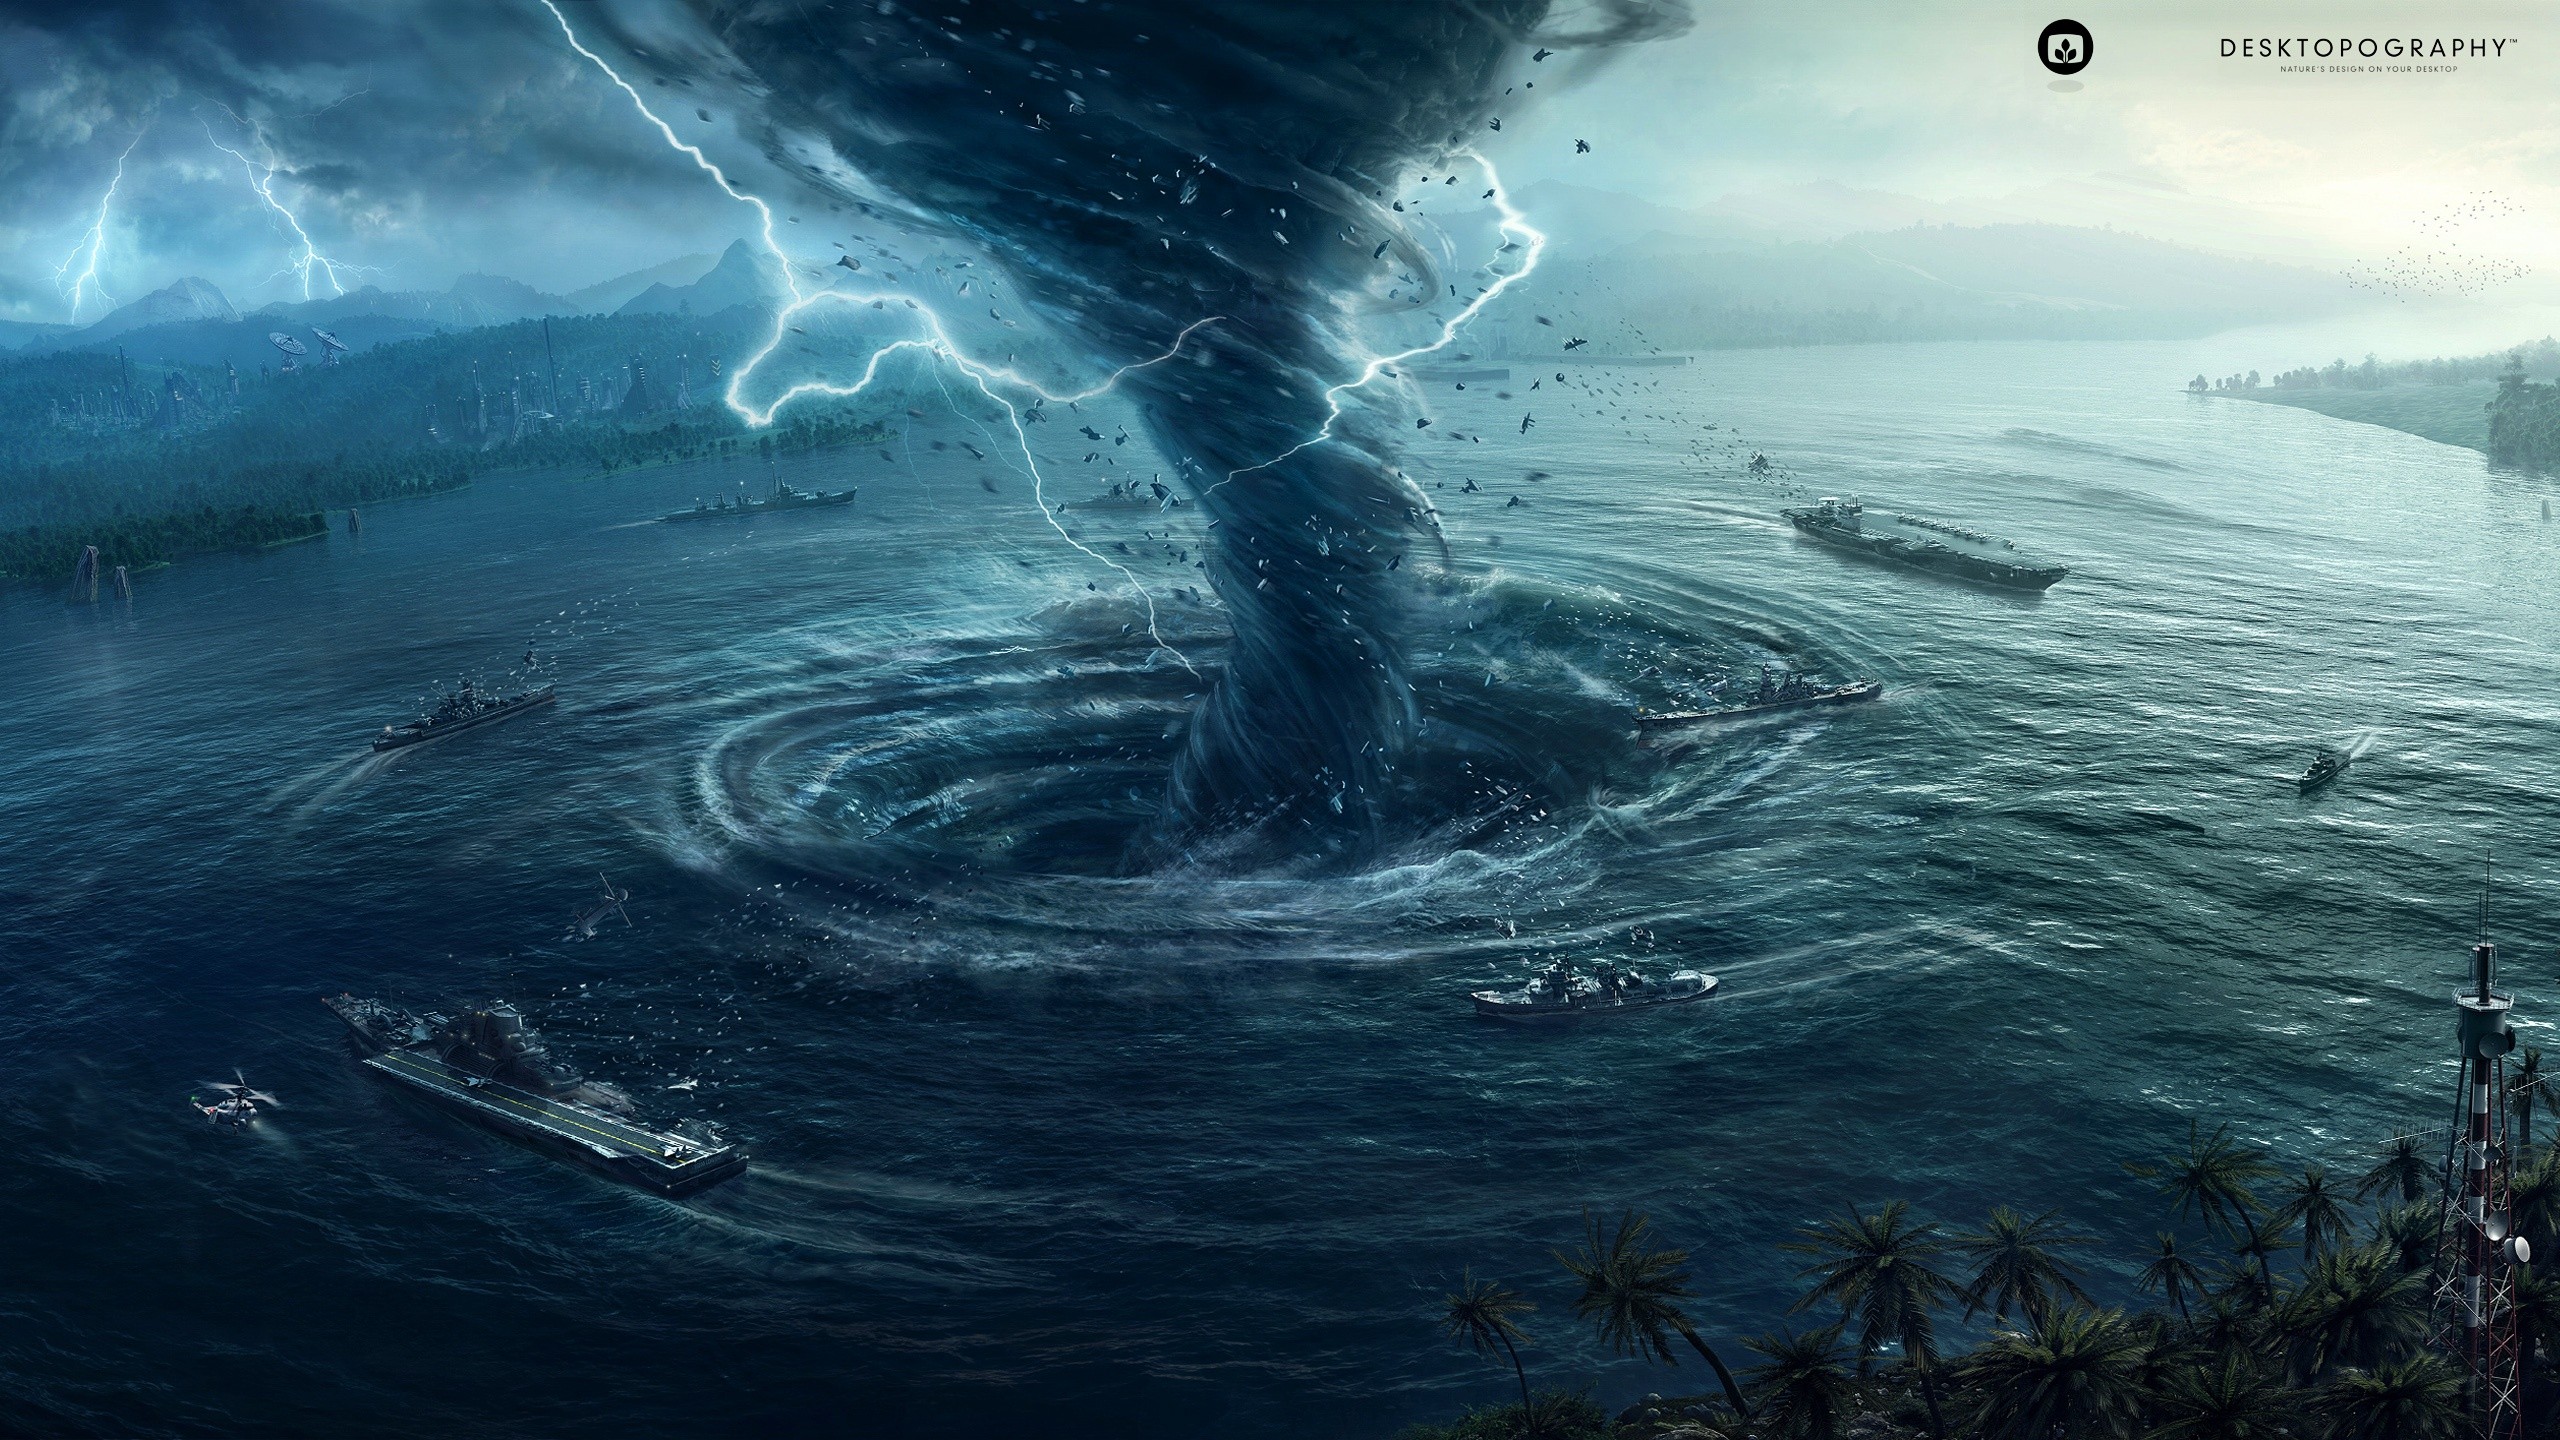 Sea Tornado Nature Water Digital Art Storm Lightning Ship Mountains Palm Trees Vortex Whirling Aircr 2560x1440